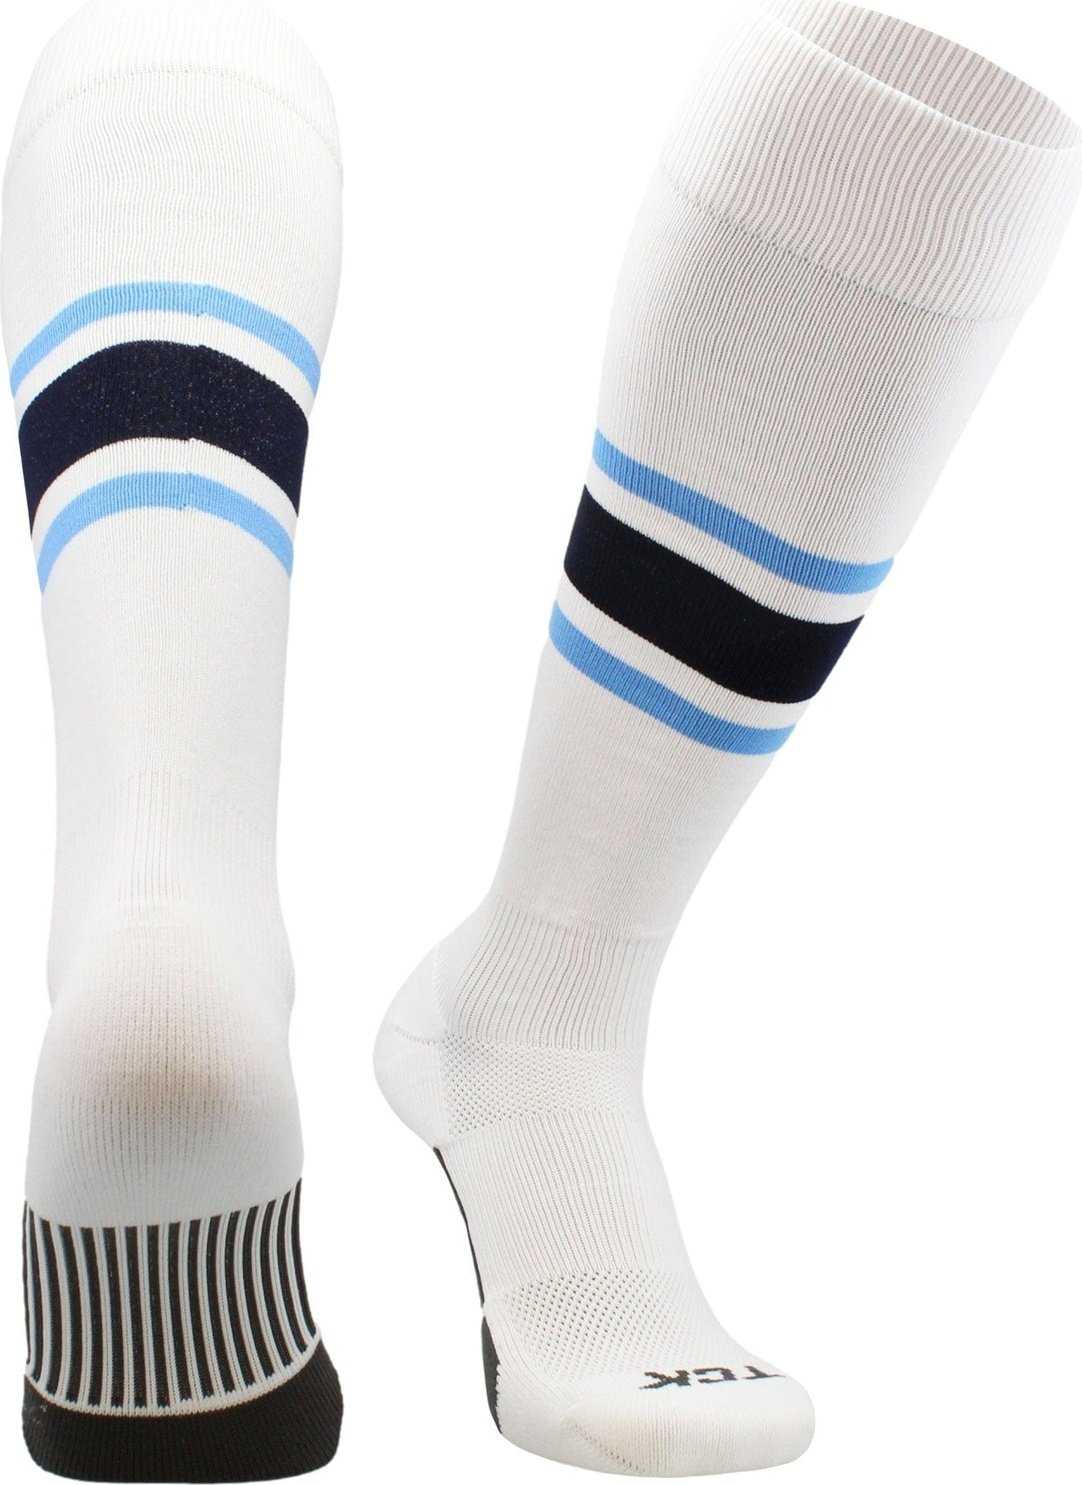 TCK Dugout Knee High Socks - White Columbia Blue Navy - HIT a Double - 2